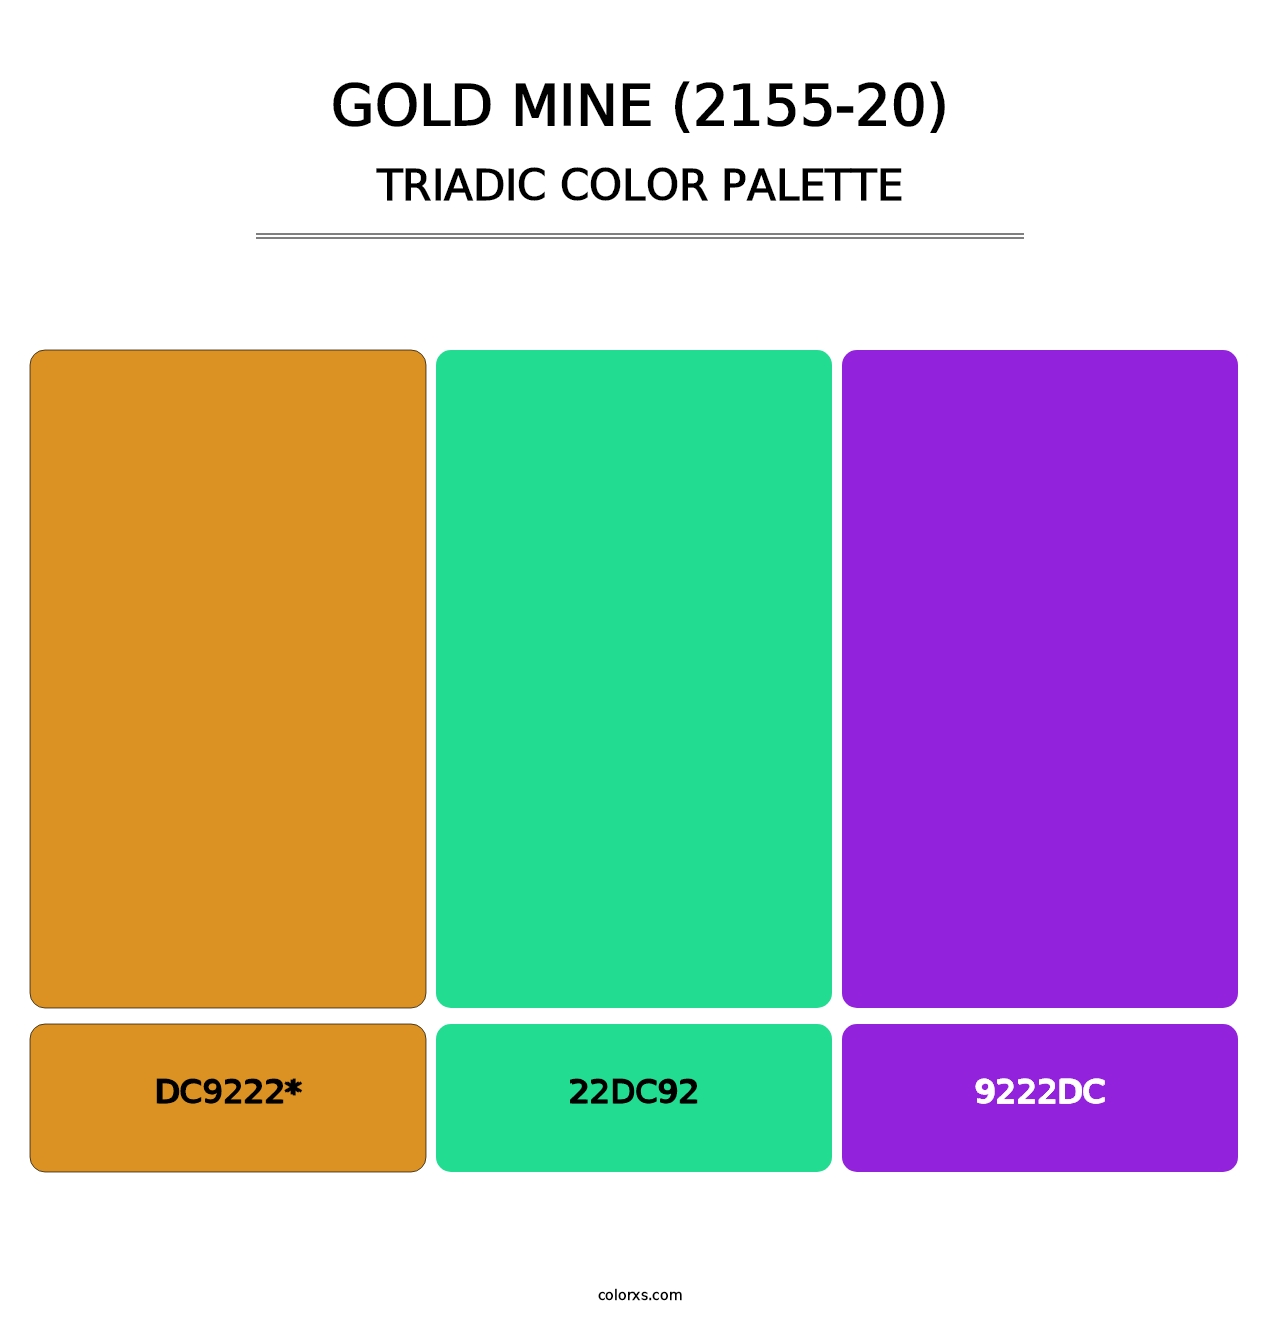 Gold Mine (2155-20) - Triadic Color Palette